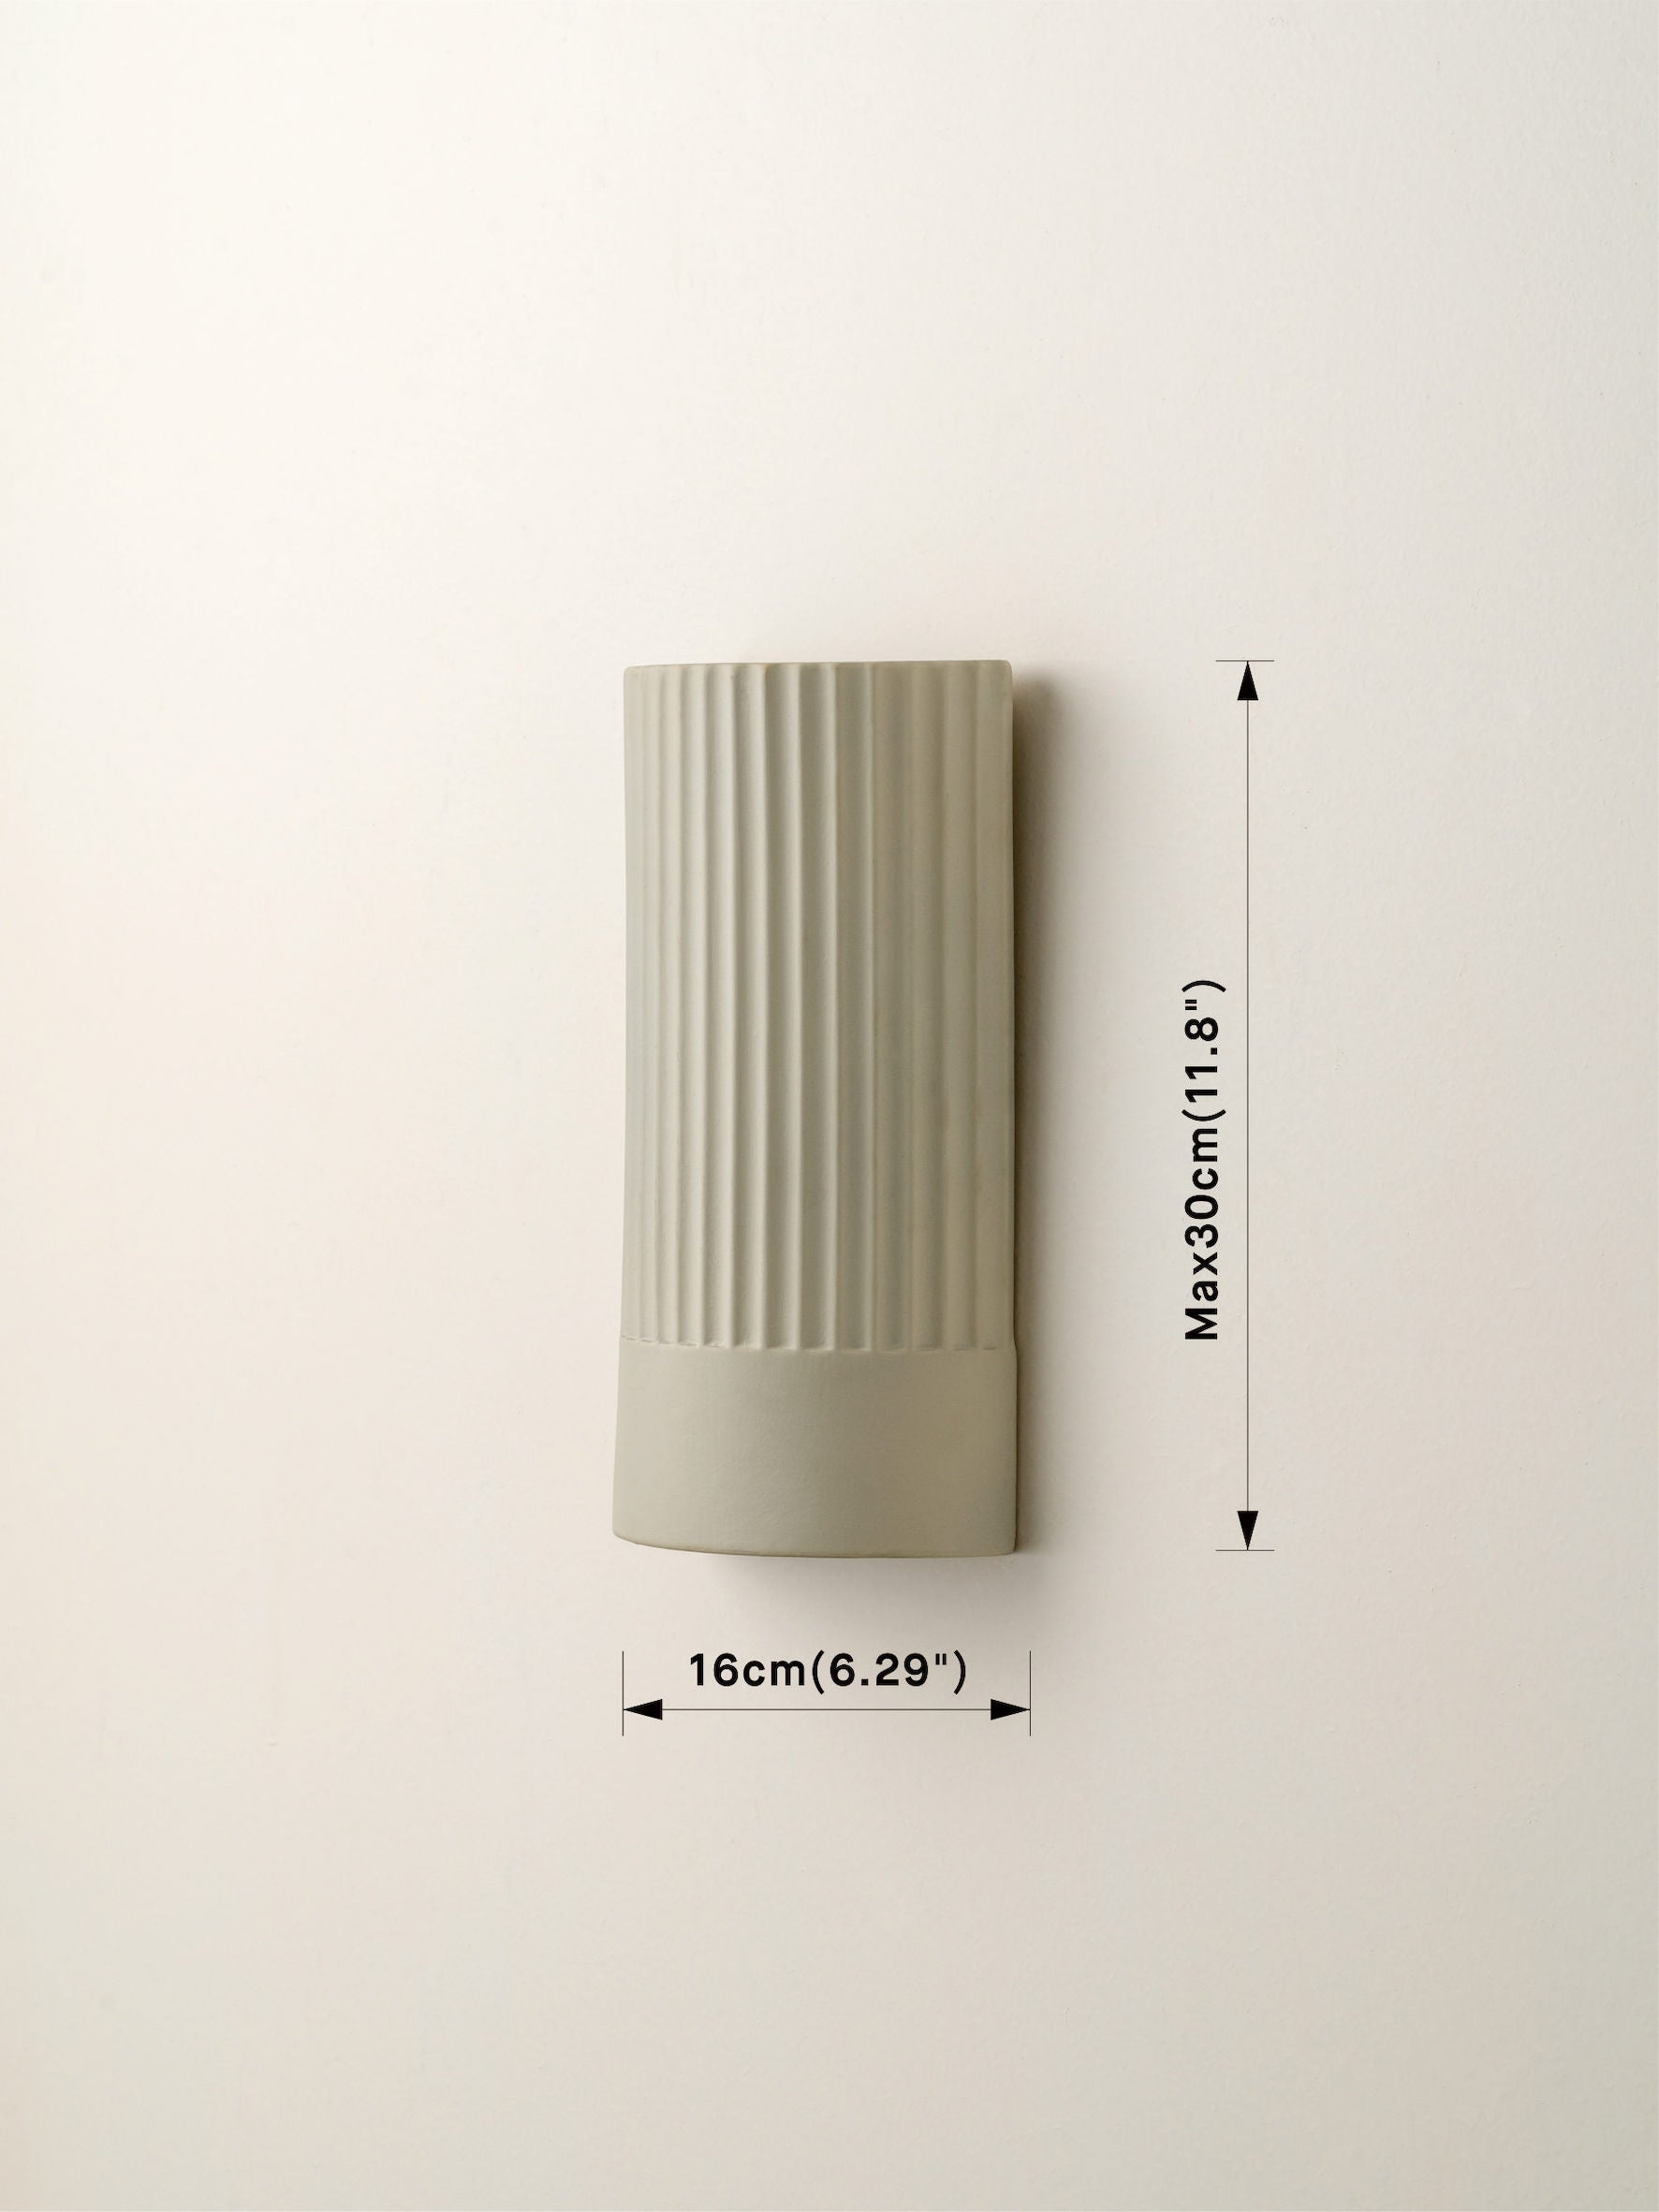 Enza - warm white  ribbed concrete wall light